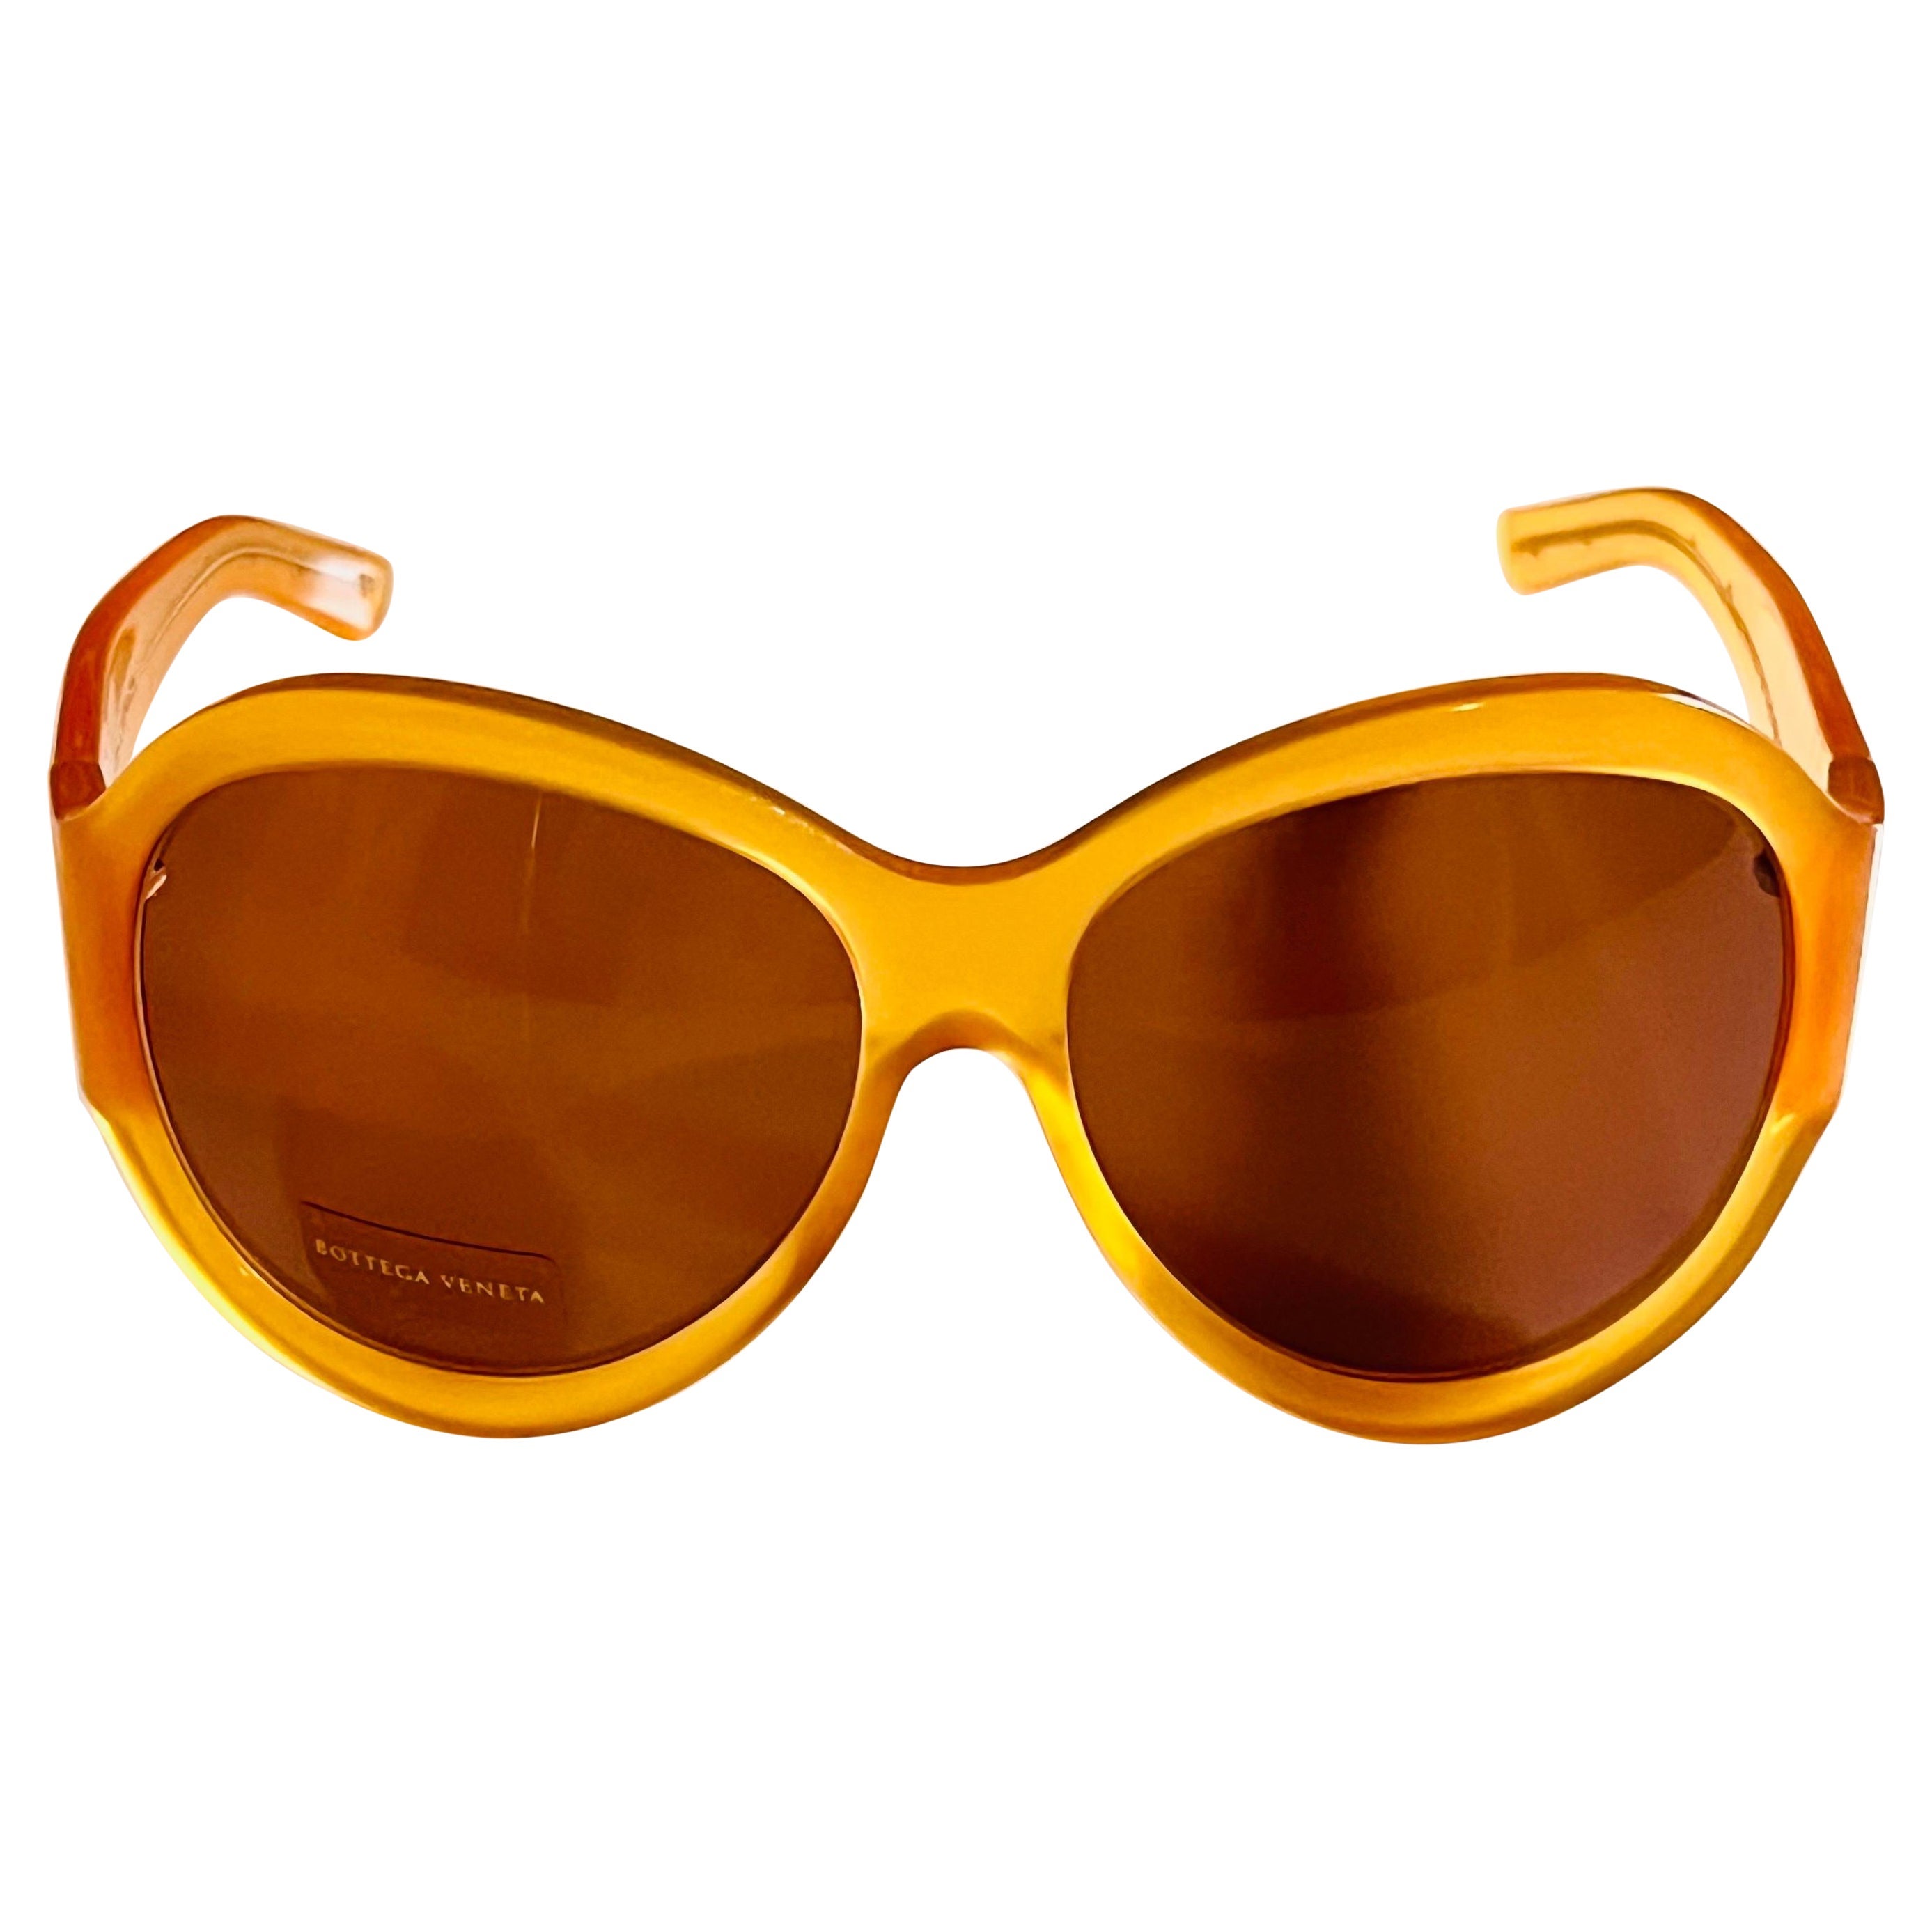 Vintage 1990s Bottega Veneta sunglasses in honey colour with butterfly detail For Sale